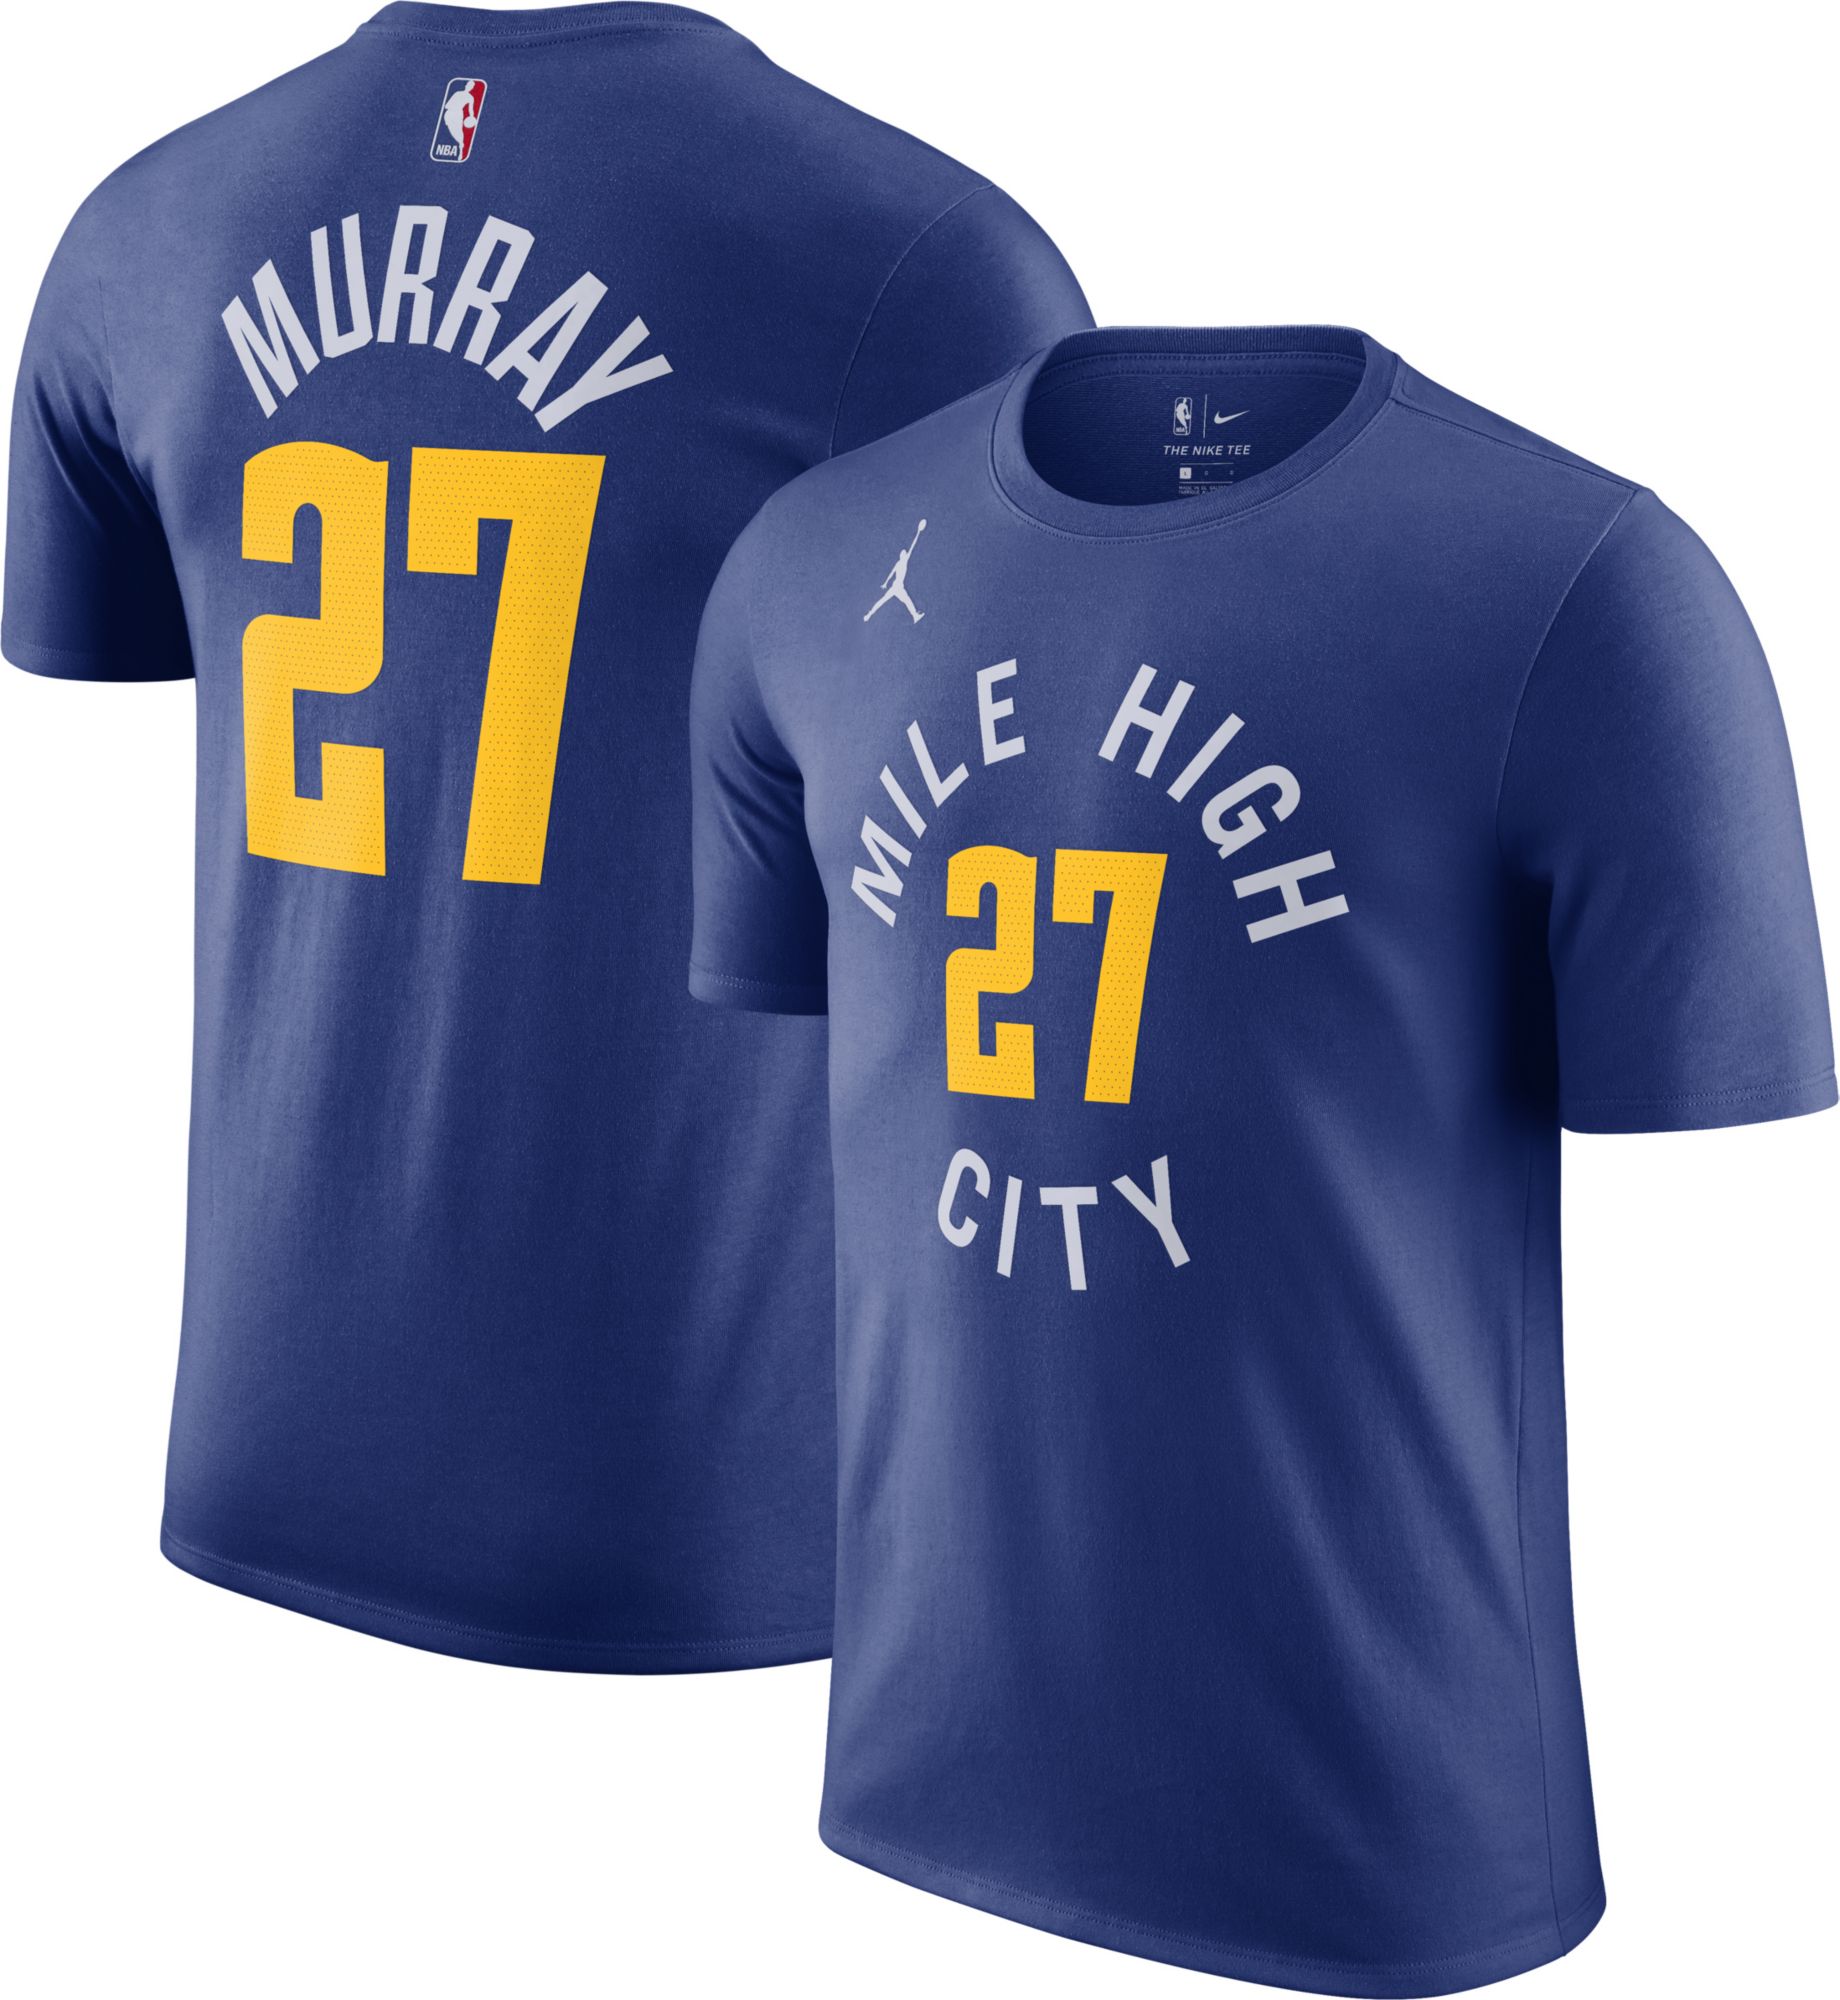 Nike / Men's Denver Nuggets Jamal Murray #27 White Dri-FIT